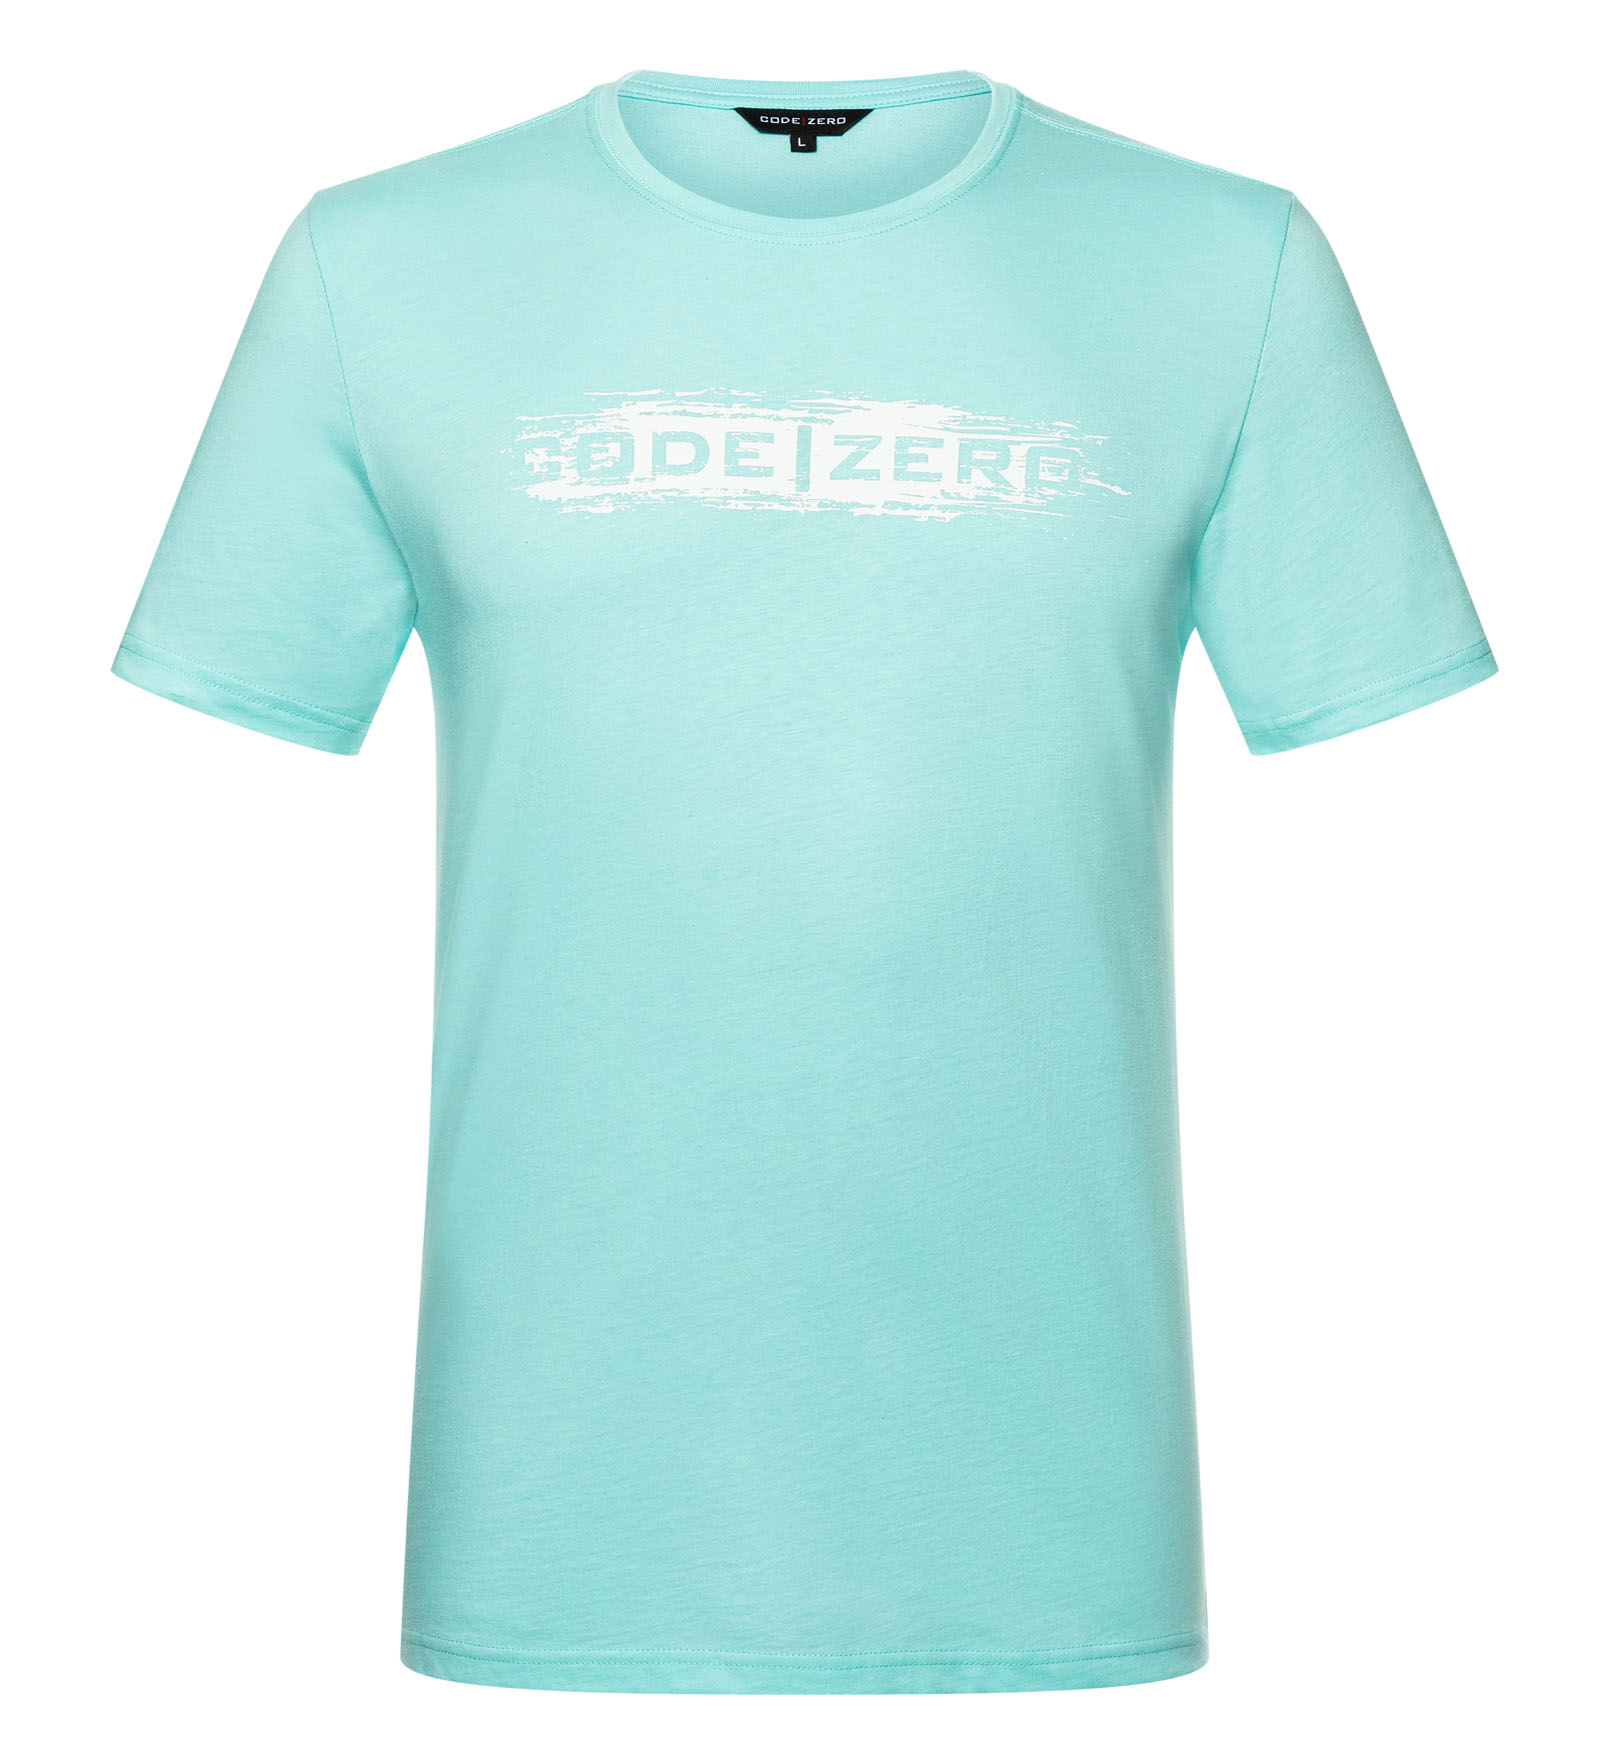 T-Shirt Herren Painted türkis XL CODE-ZERO von CODE-ZERO